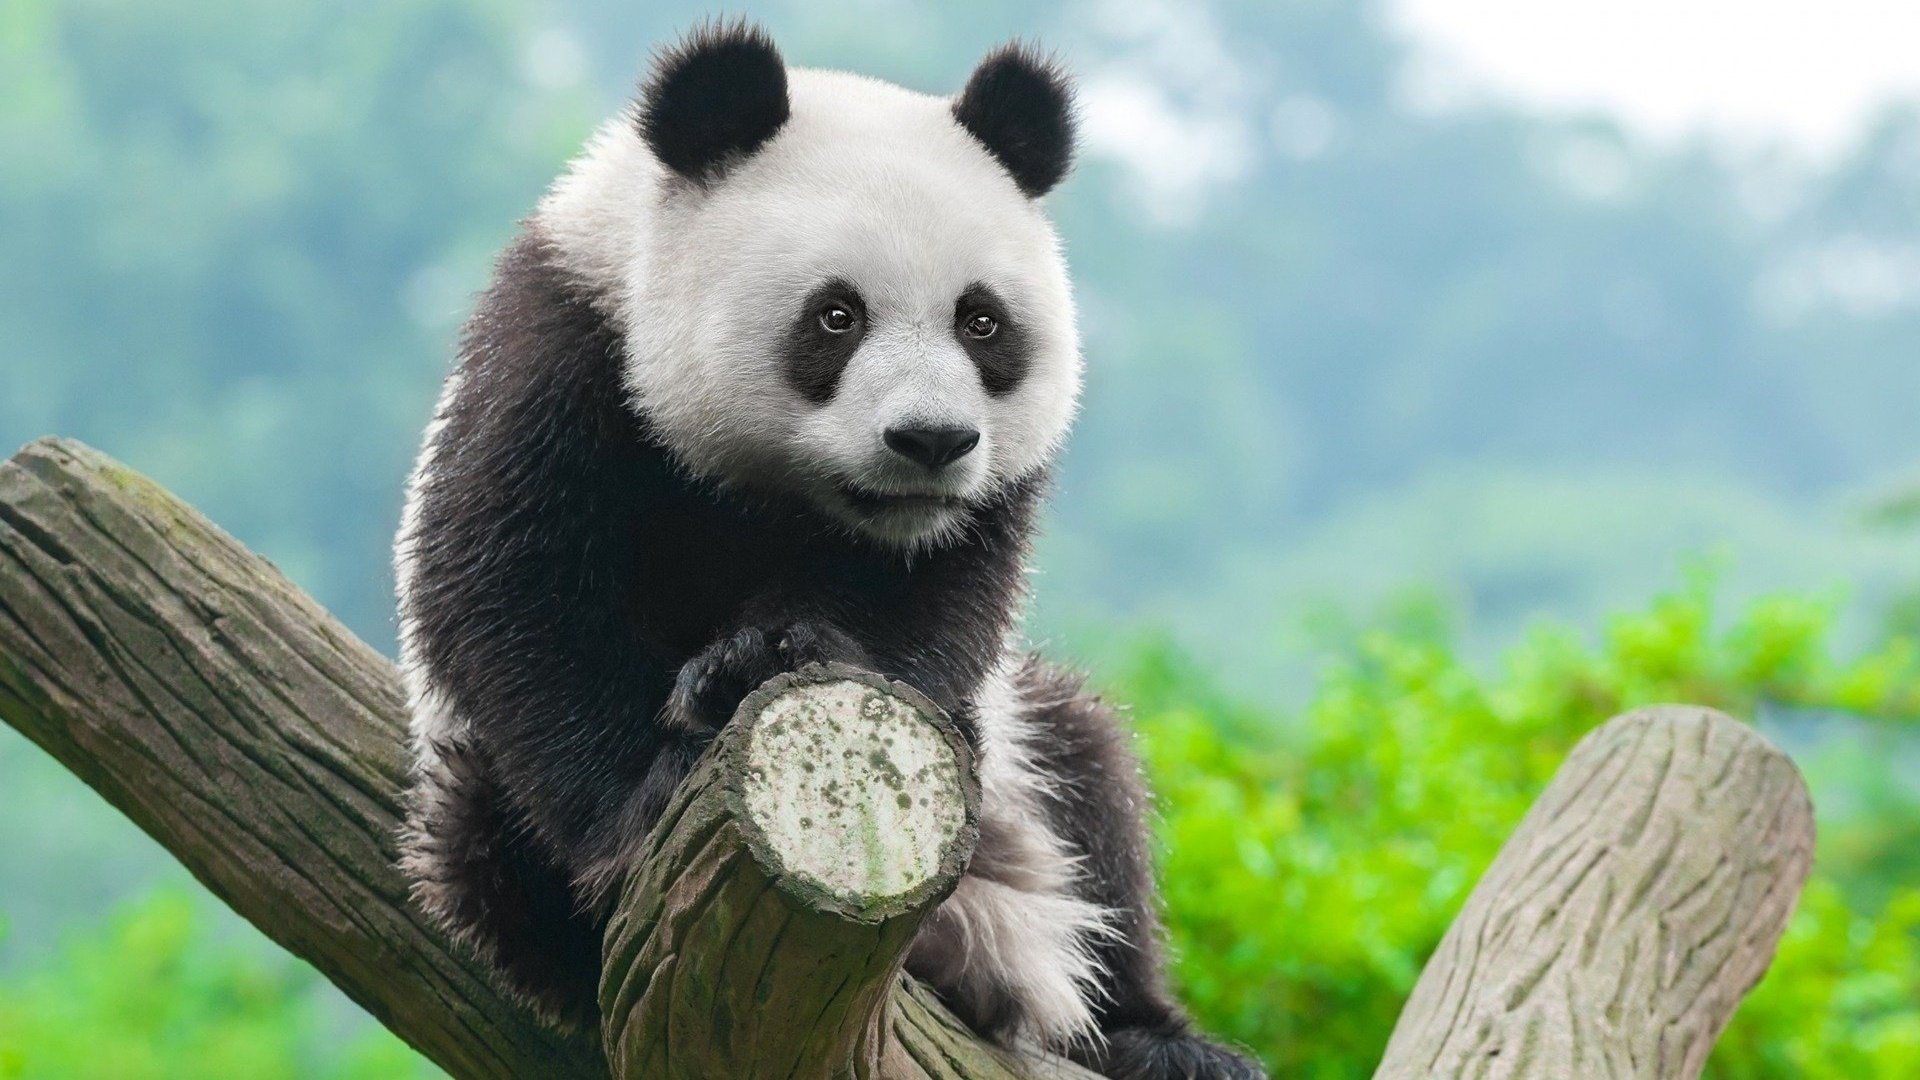  Panda  in Tree HD Wallpaper Background Image 1920x1080  